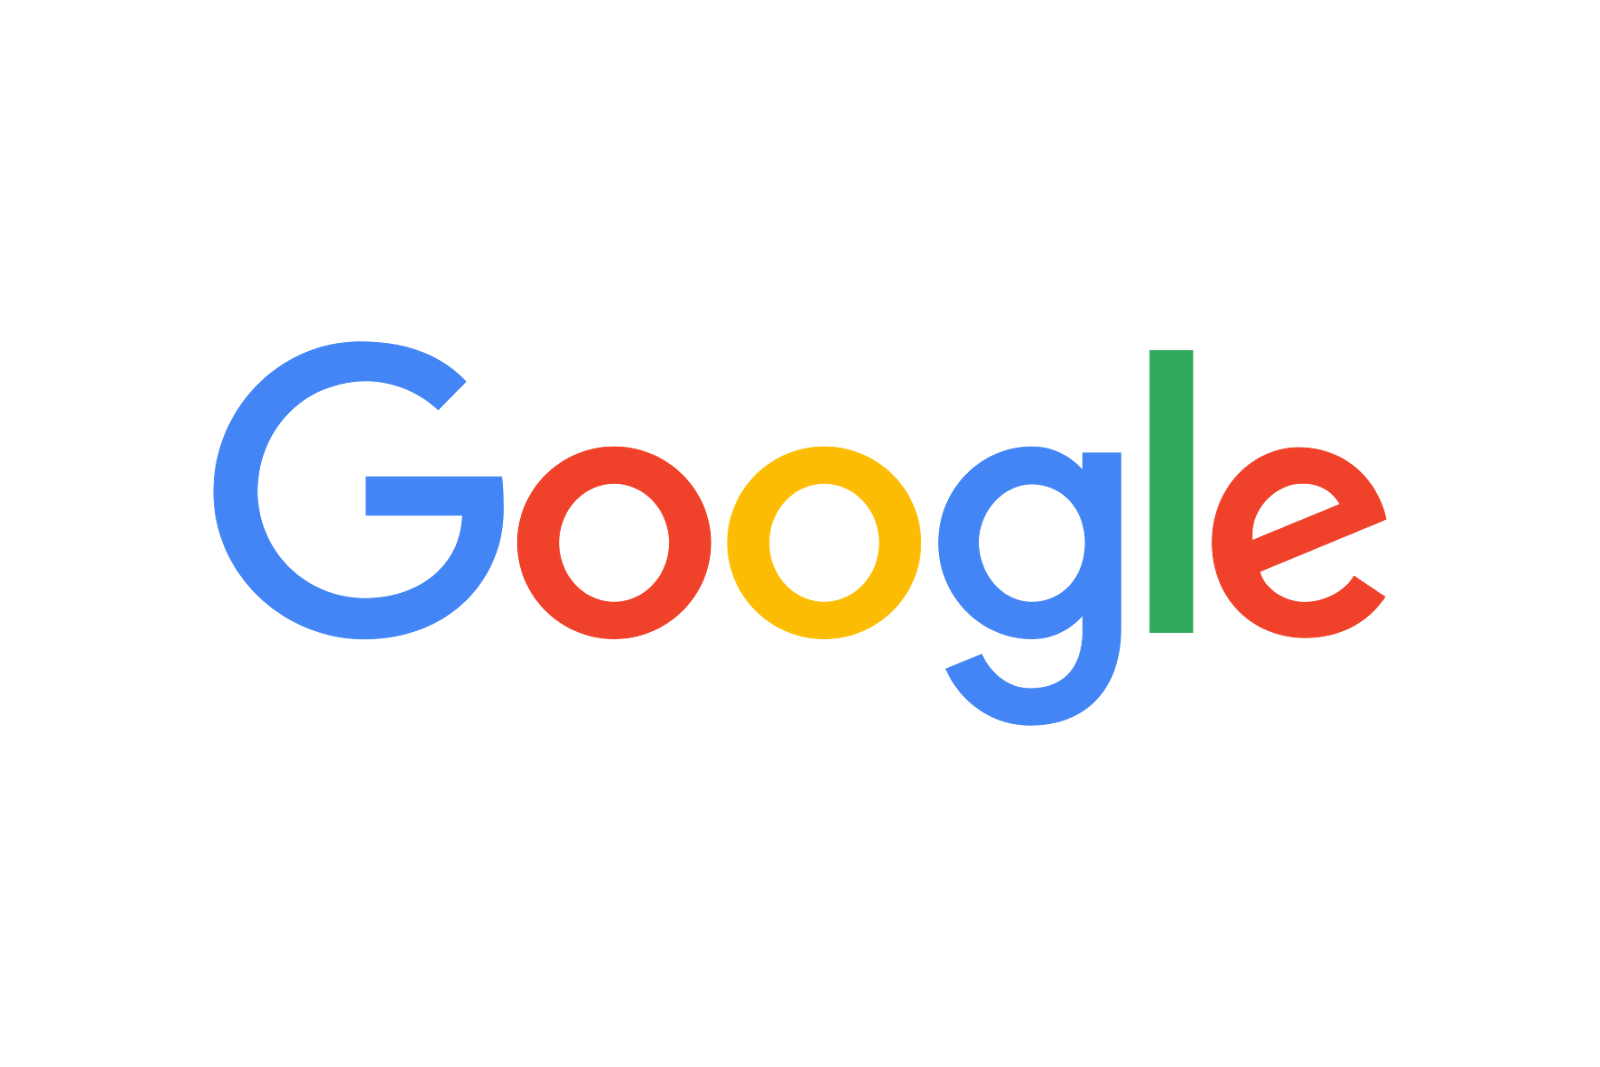 Гугл. Гугл лого. Гугл фото эмблема. Угугуггугугуг. Image new ru